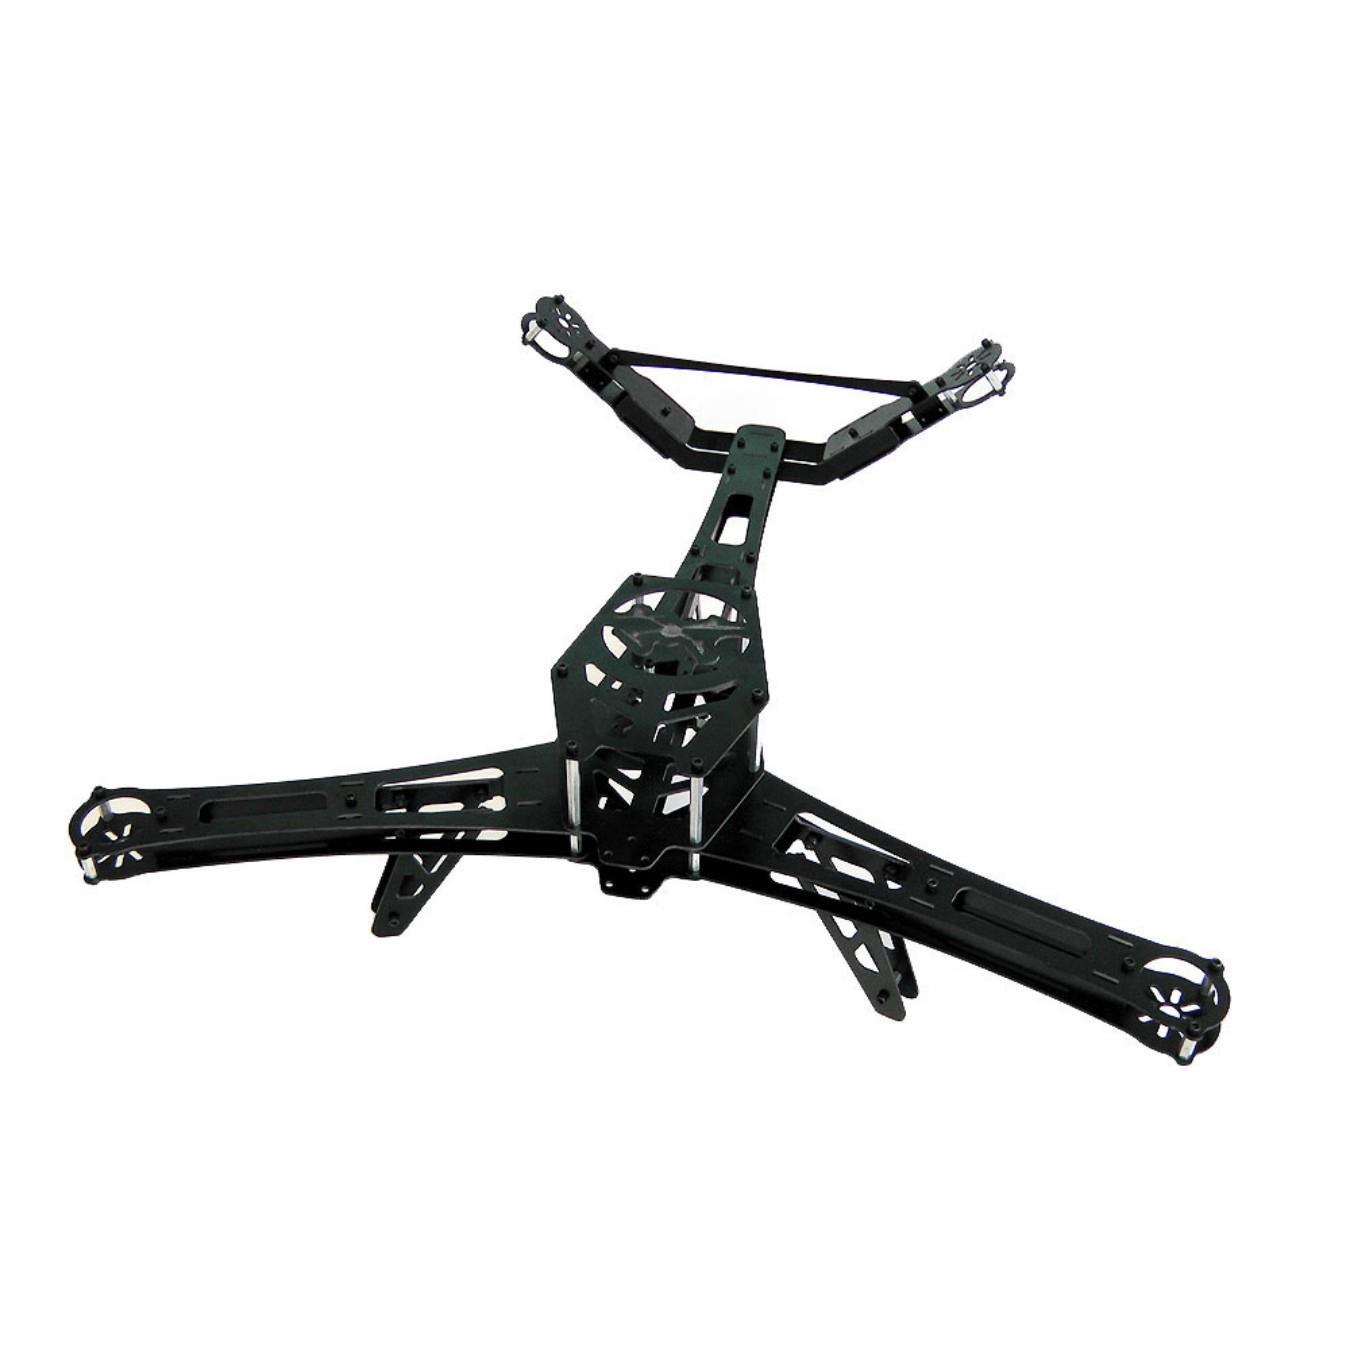 Kit de Dron Hunter VTail 500 Lynxmotion (Solo Hardware) - Haga clic para ampliar